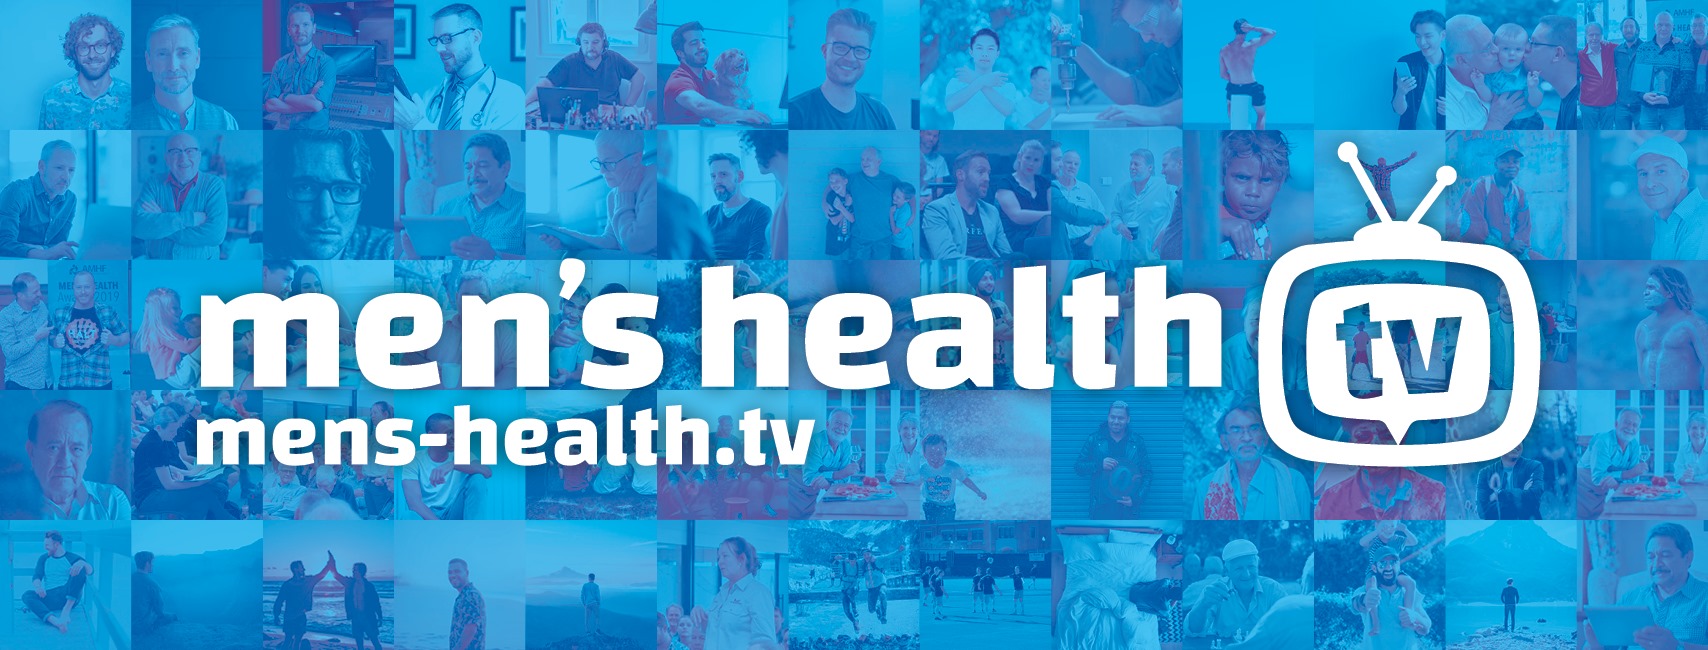 mens health tv banner